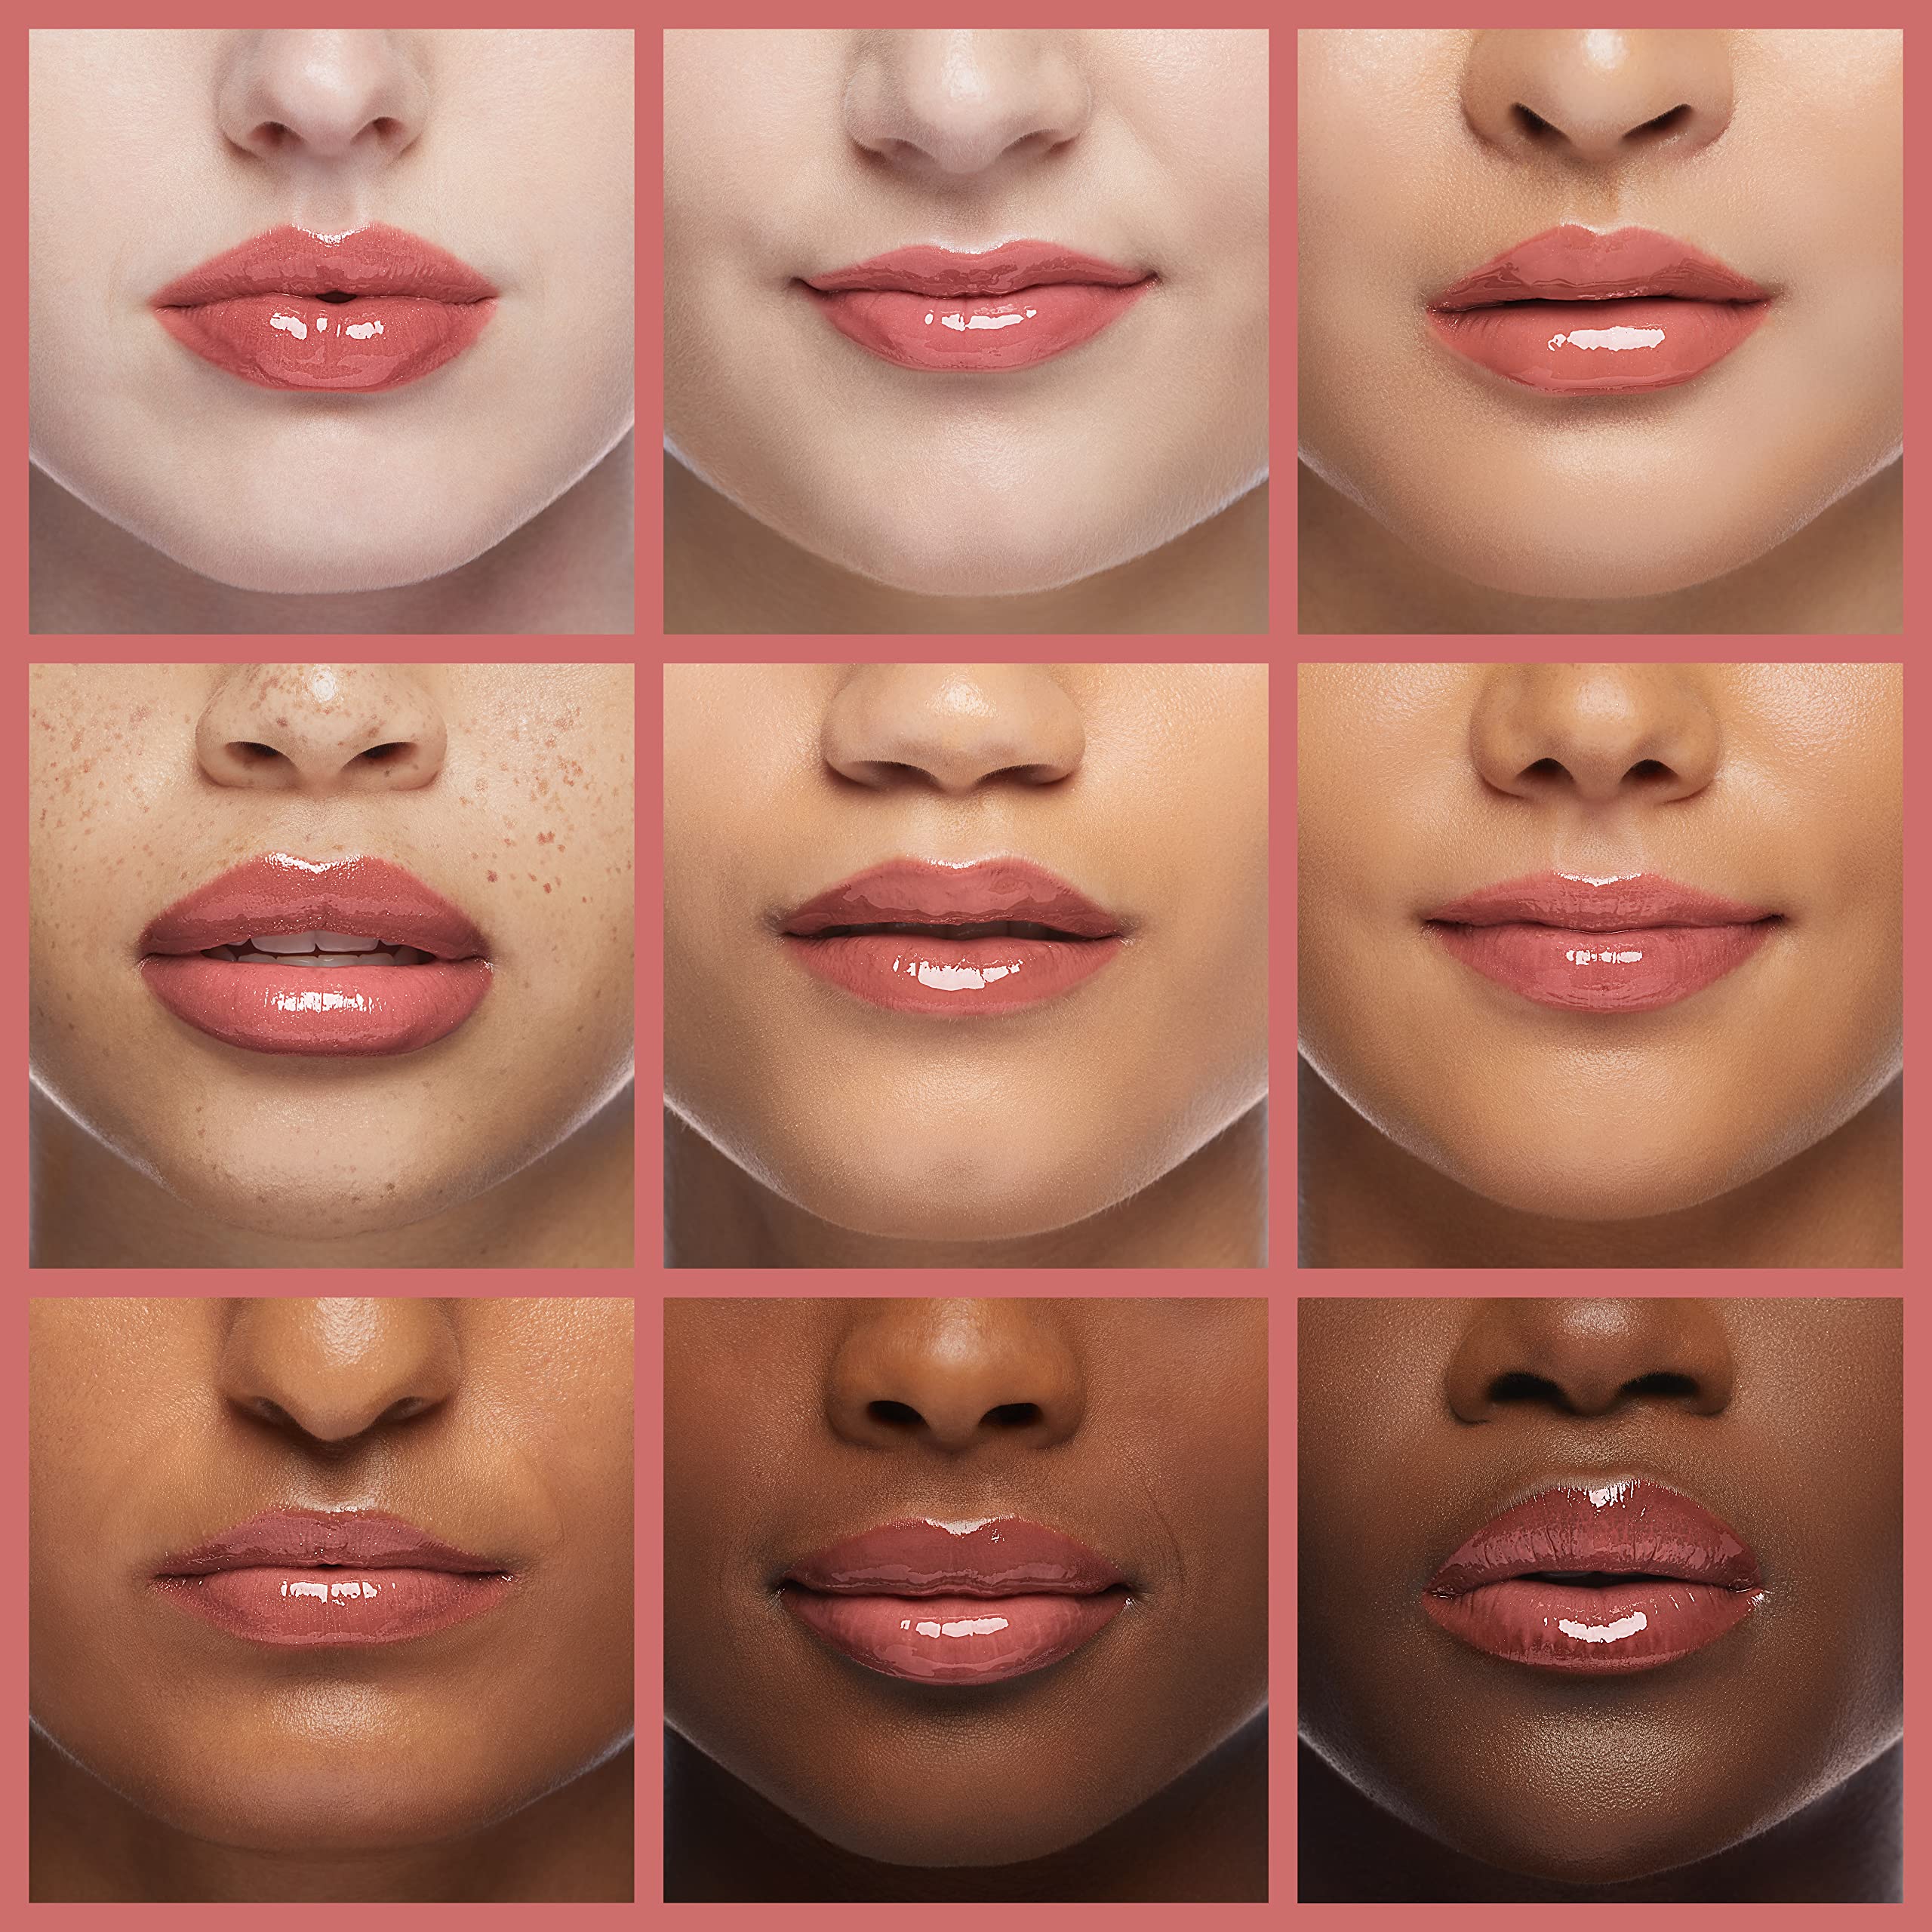 Milani Keep It Full Nourishing Lip Plumper (0.13 Fl. Oz.) Cruelty-Free Lip Gloss for Soft, Fuller-Looking Lips (Luminoso)